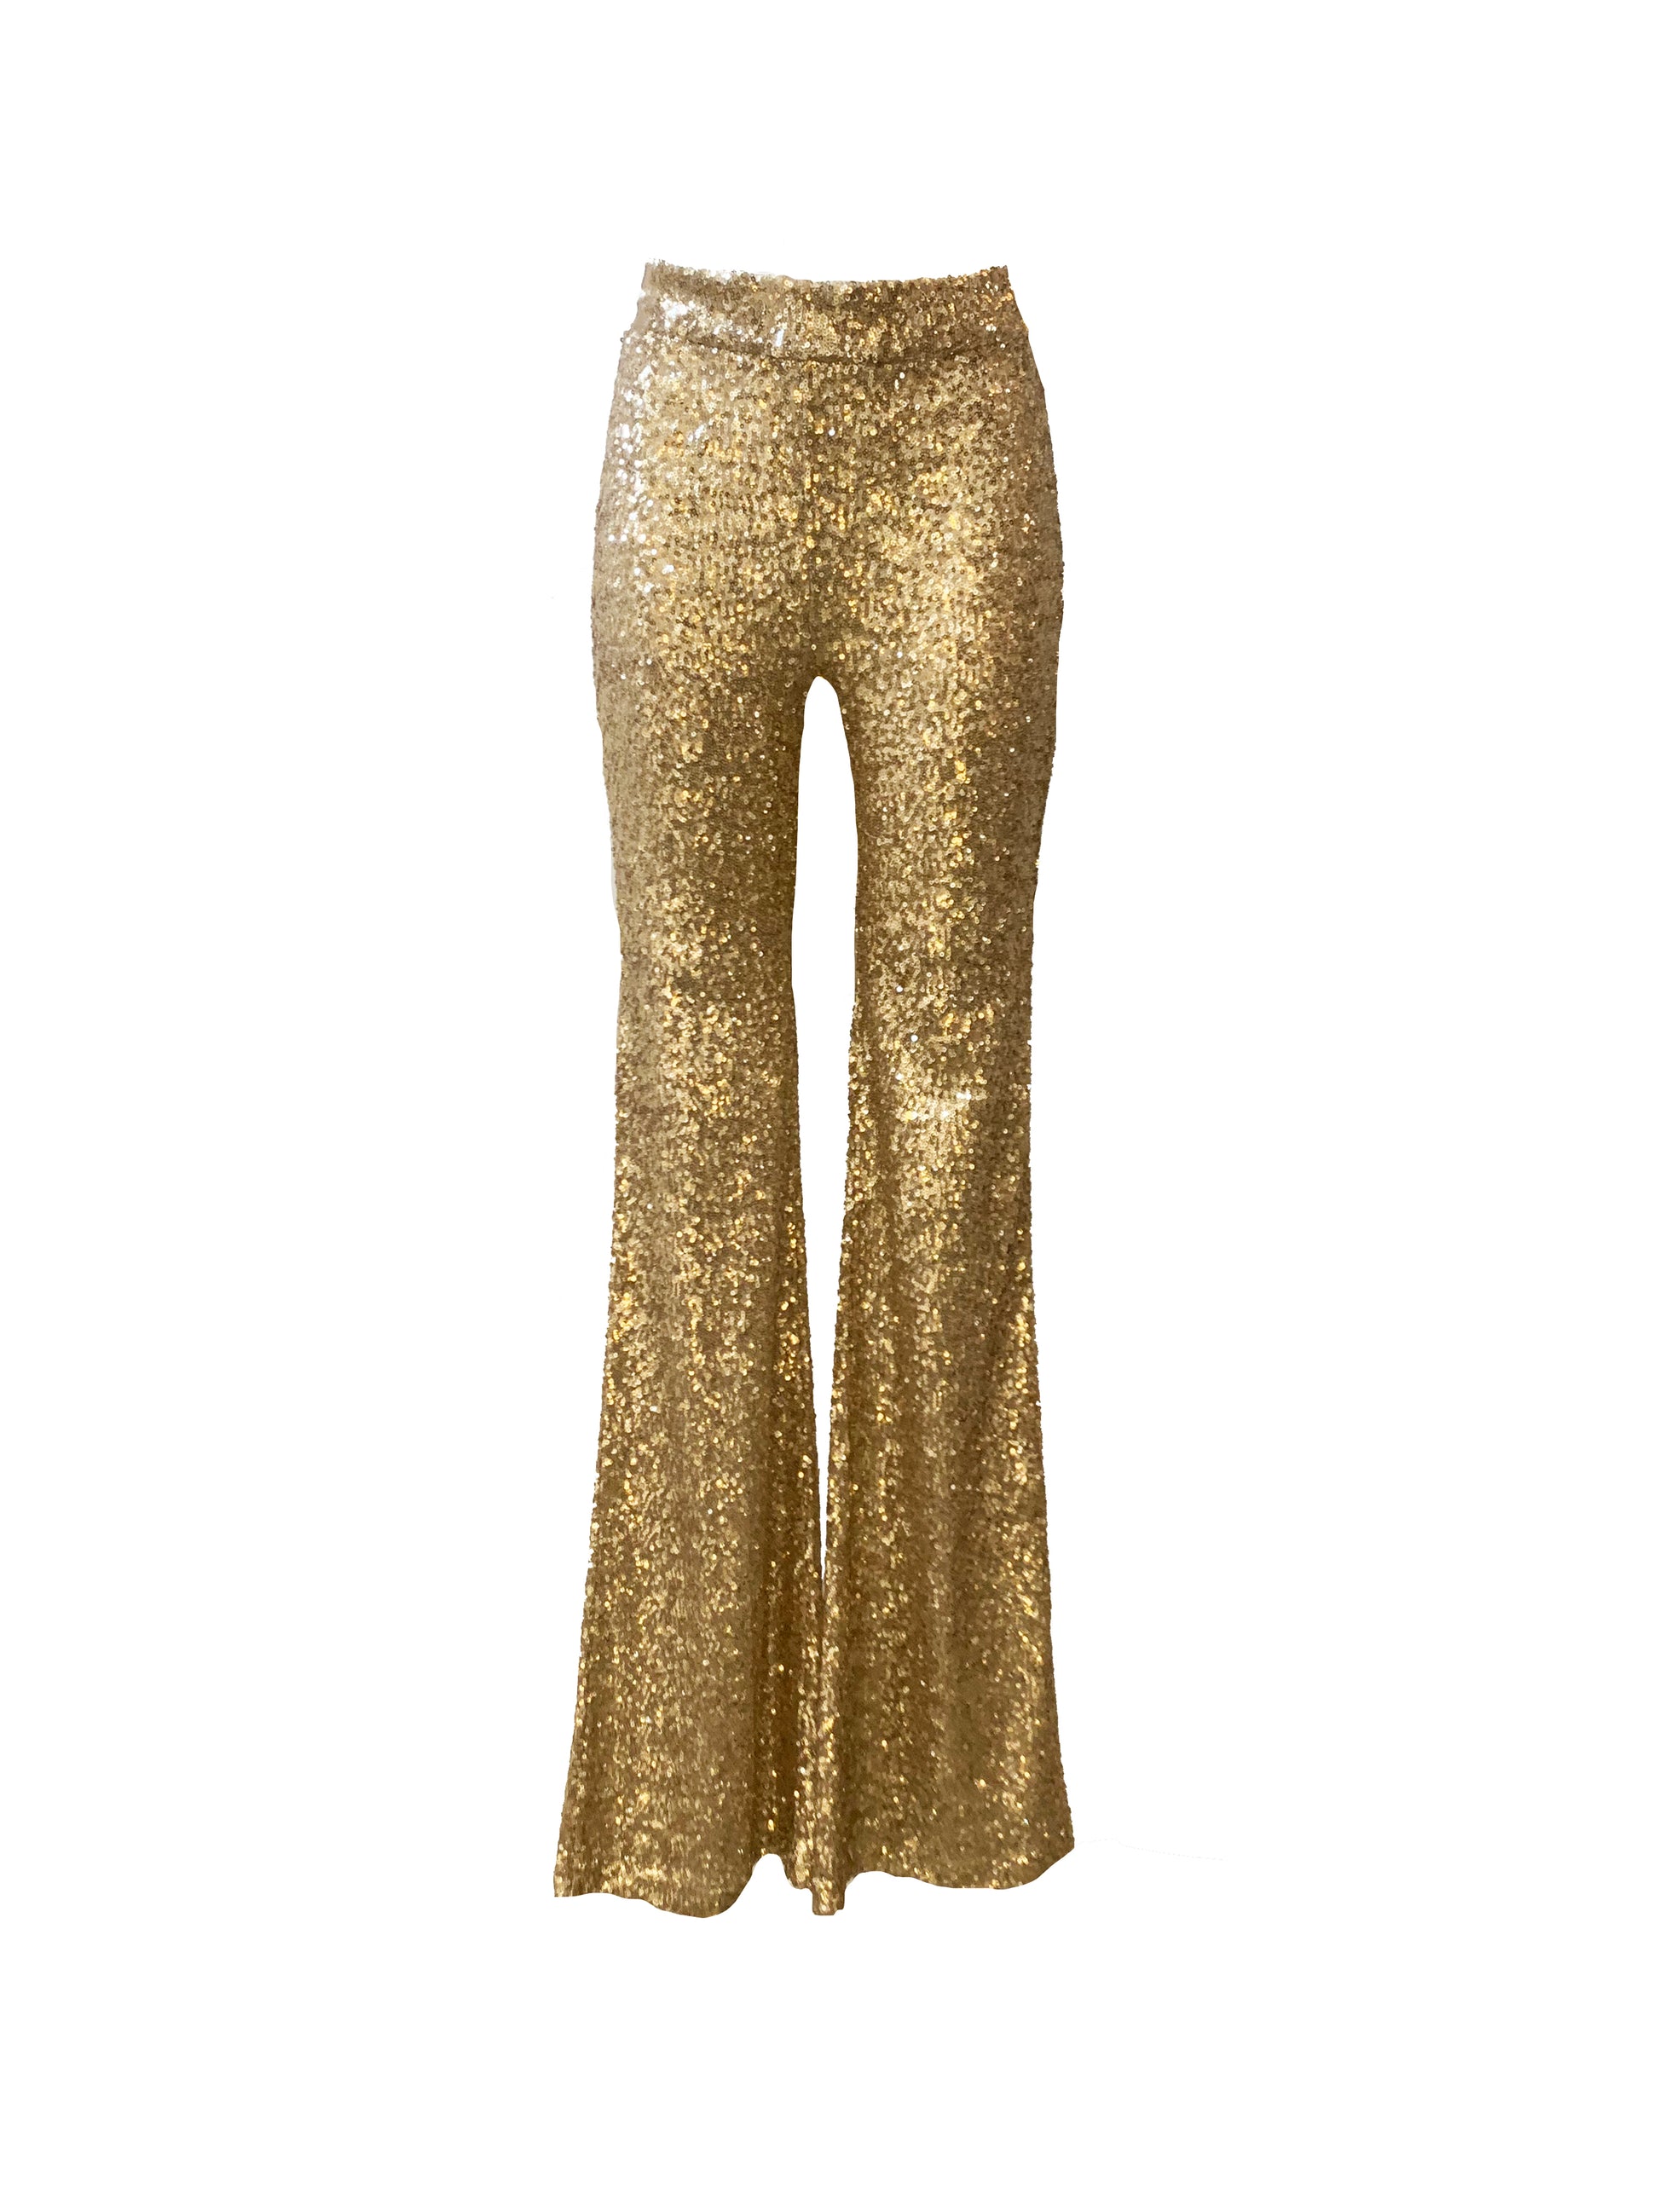 The Gold Sequin Trousers – Hildur Yeoman